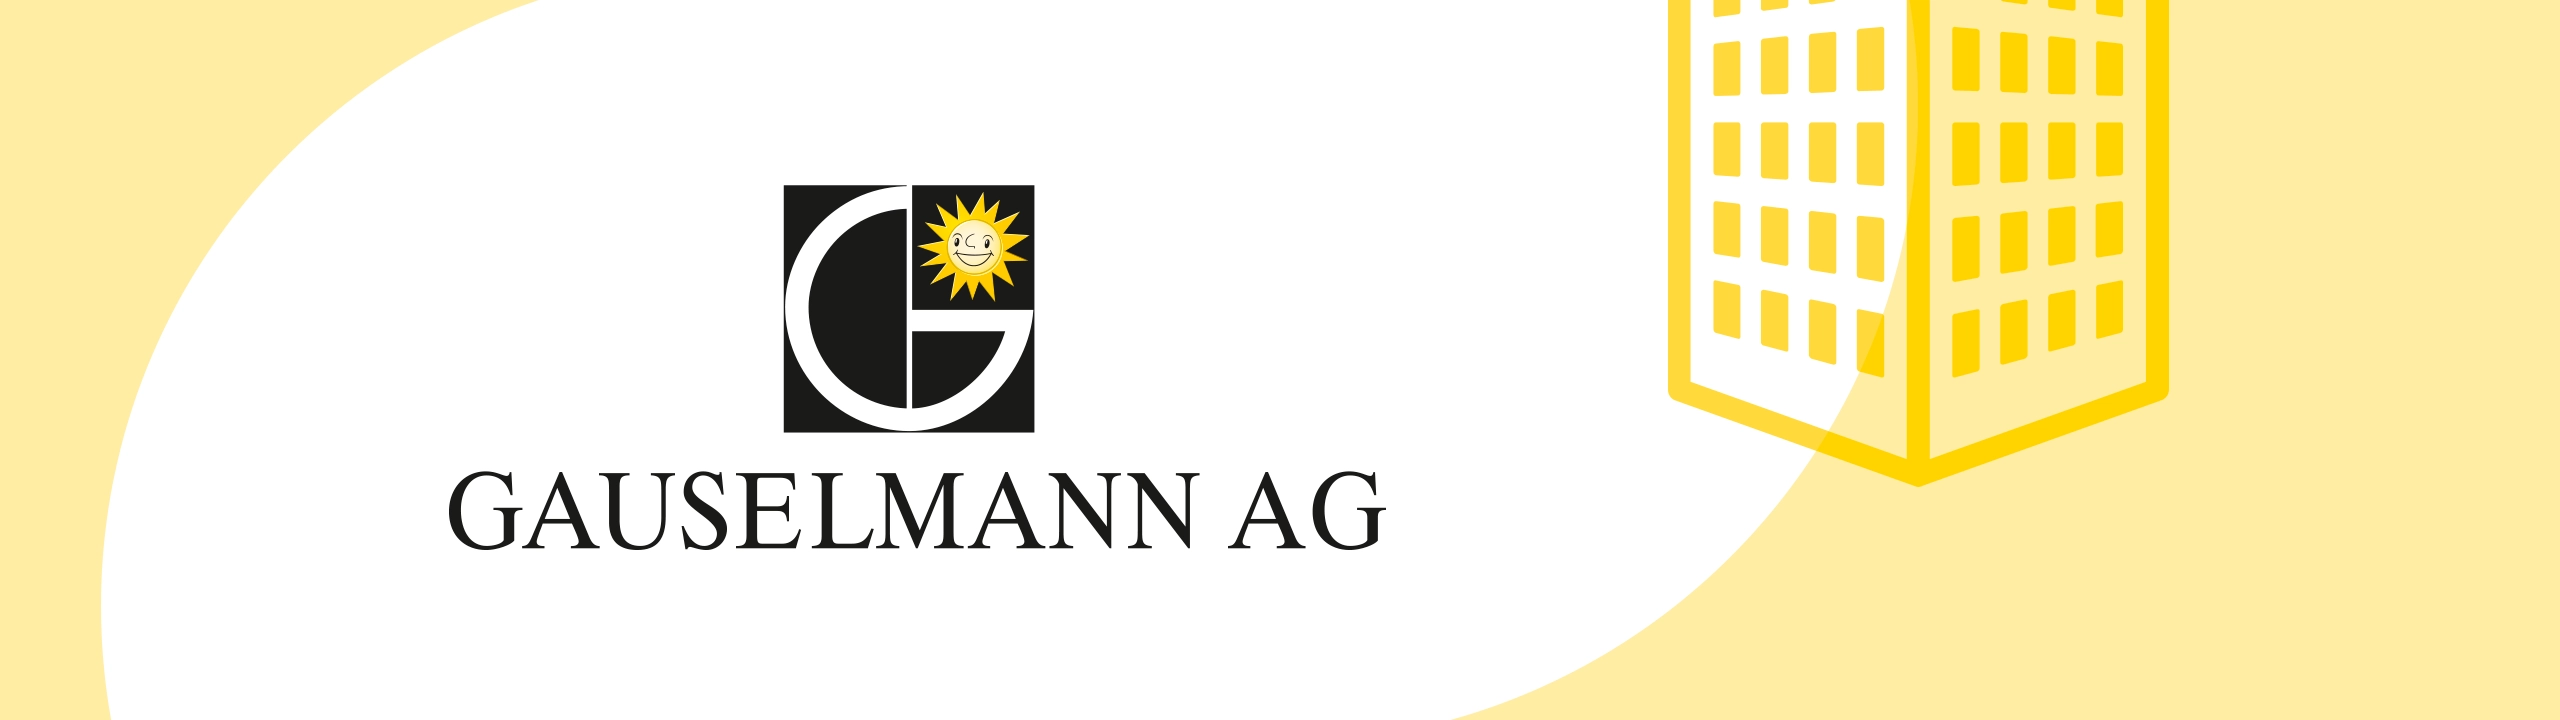 Gauselmann AG Logo © Gauselmann Group